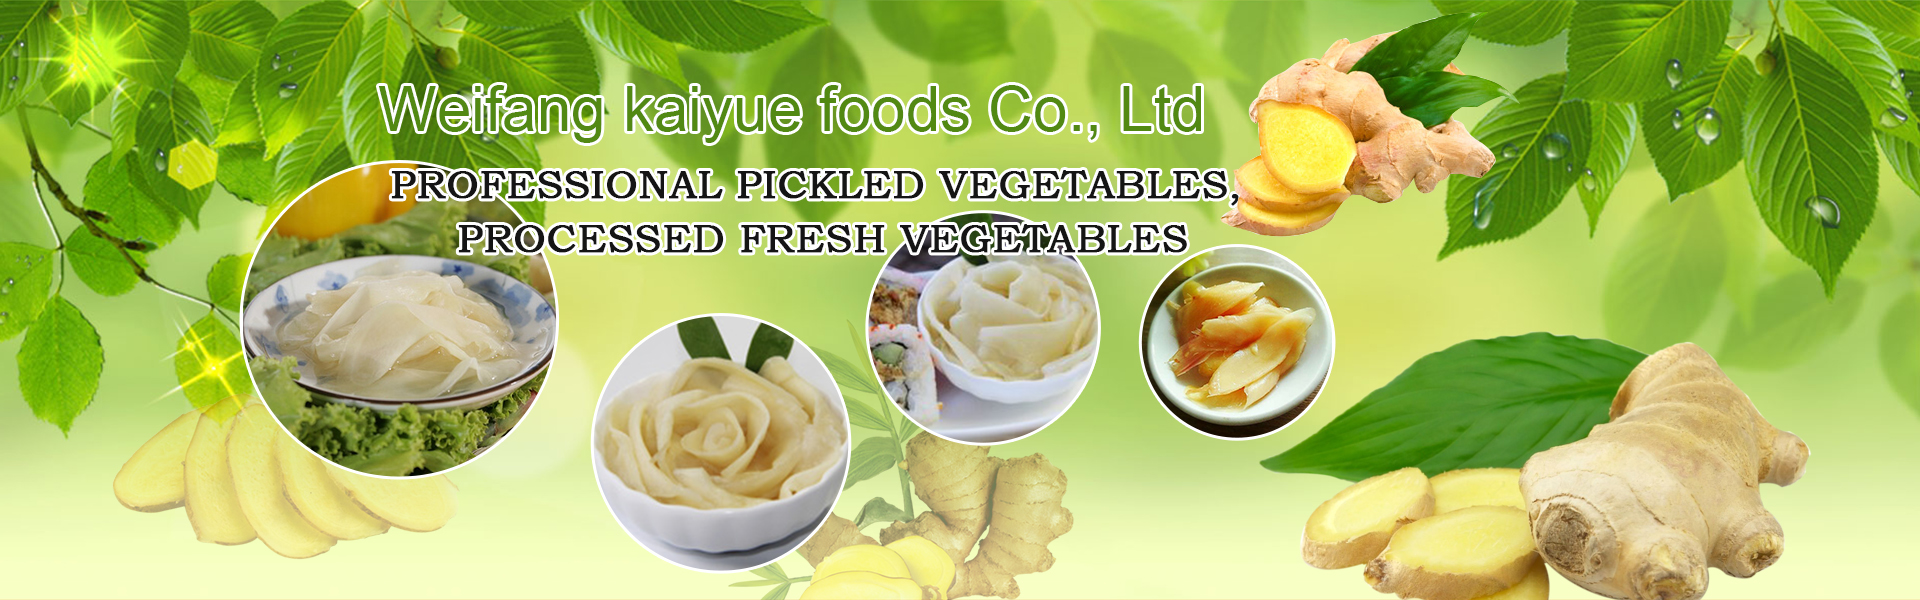 Weifang kaiyue foods Co., Ltd